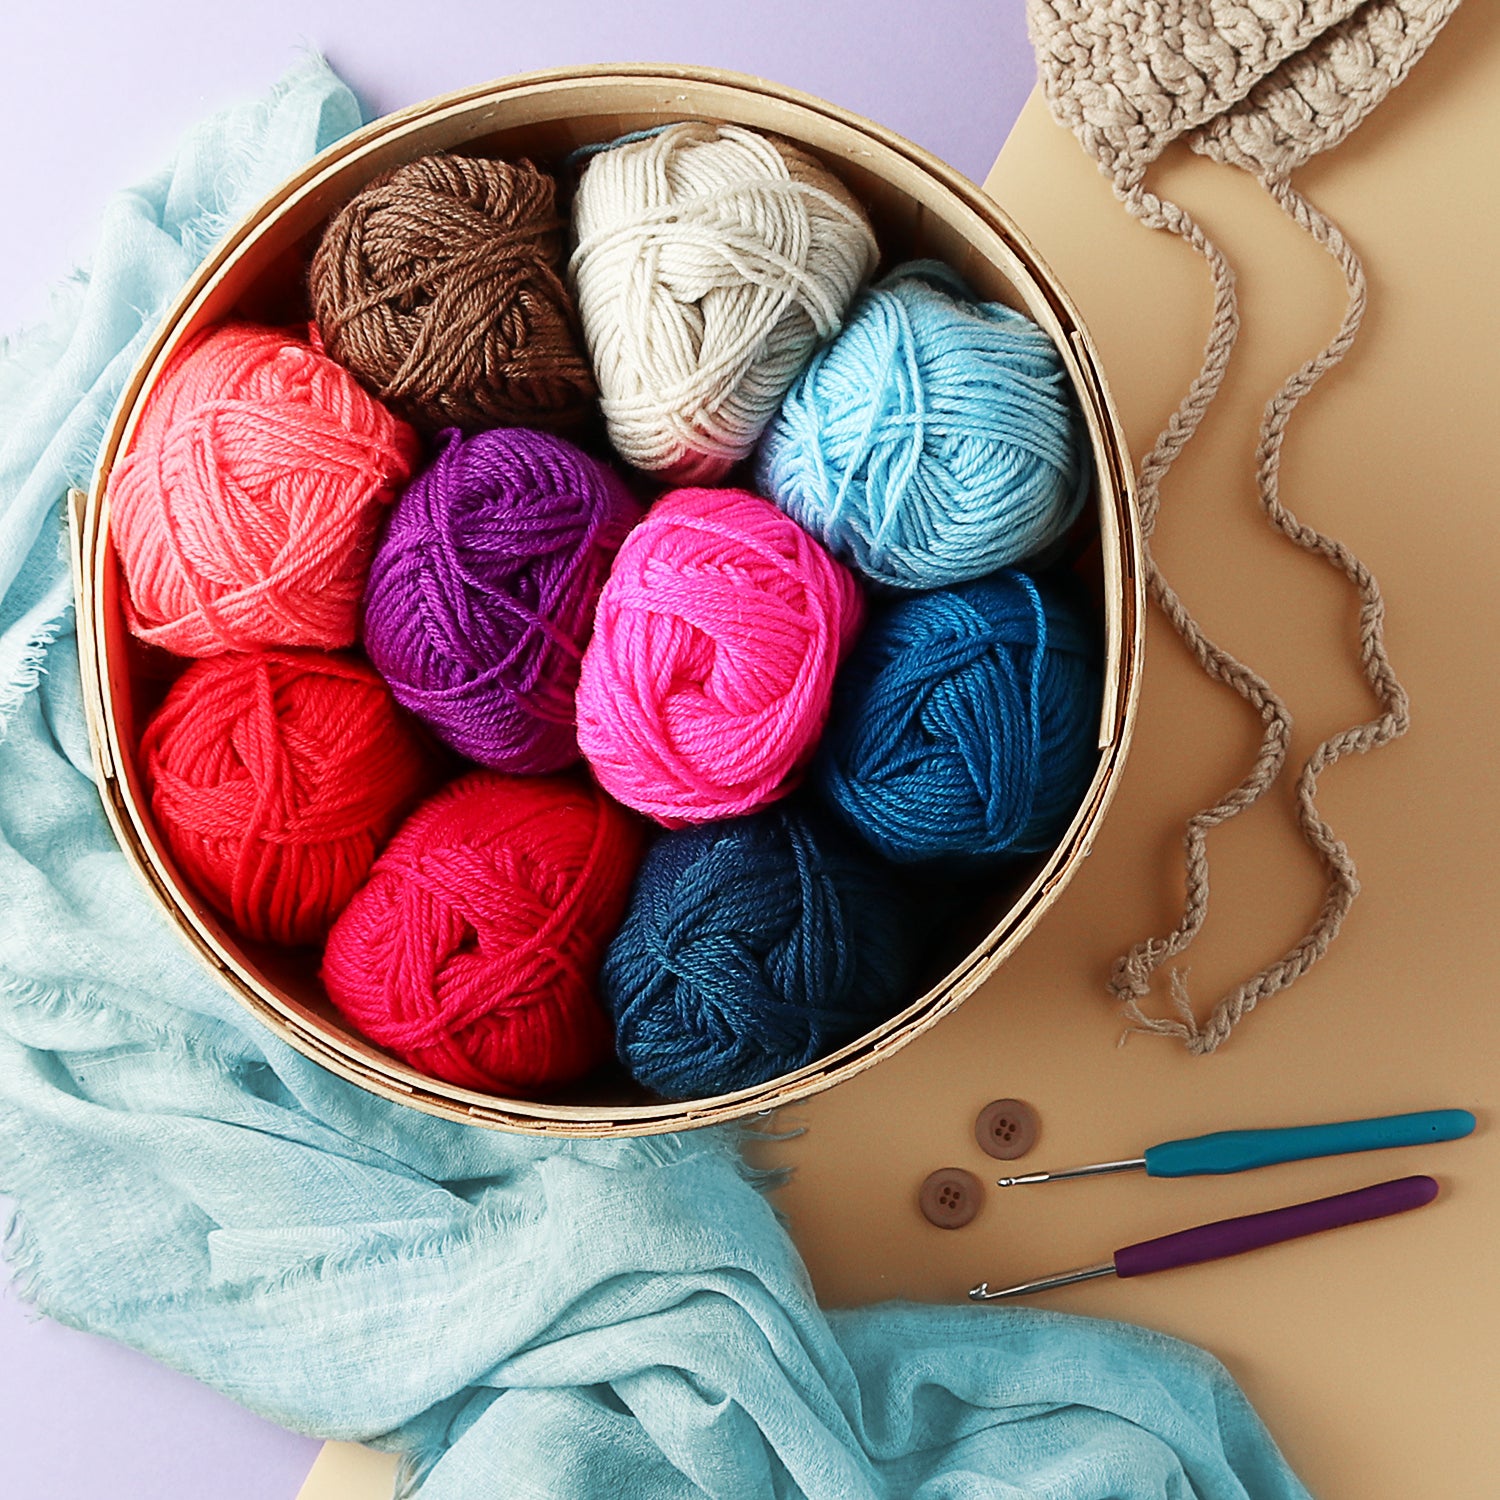  Crochet Kits - Cotton / Crochet Kits / Knitting & Crochet  Supplies: Arts, Crafts & Sewing